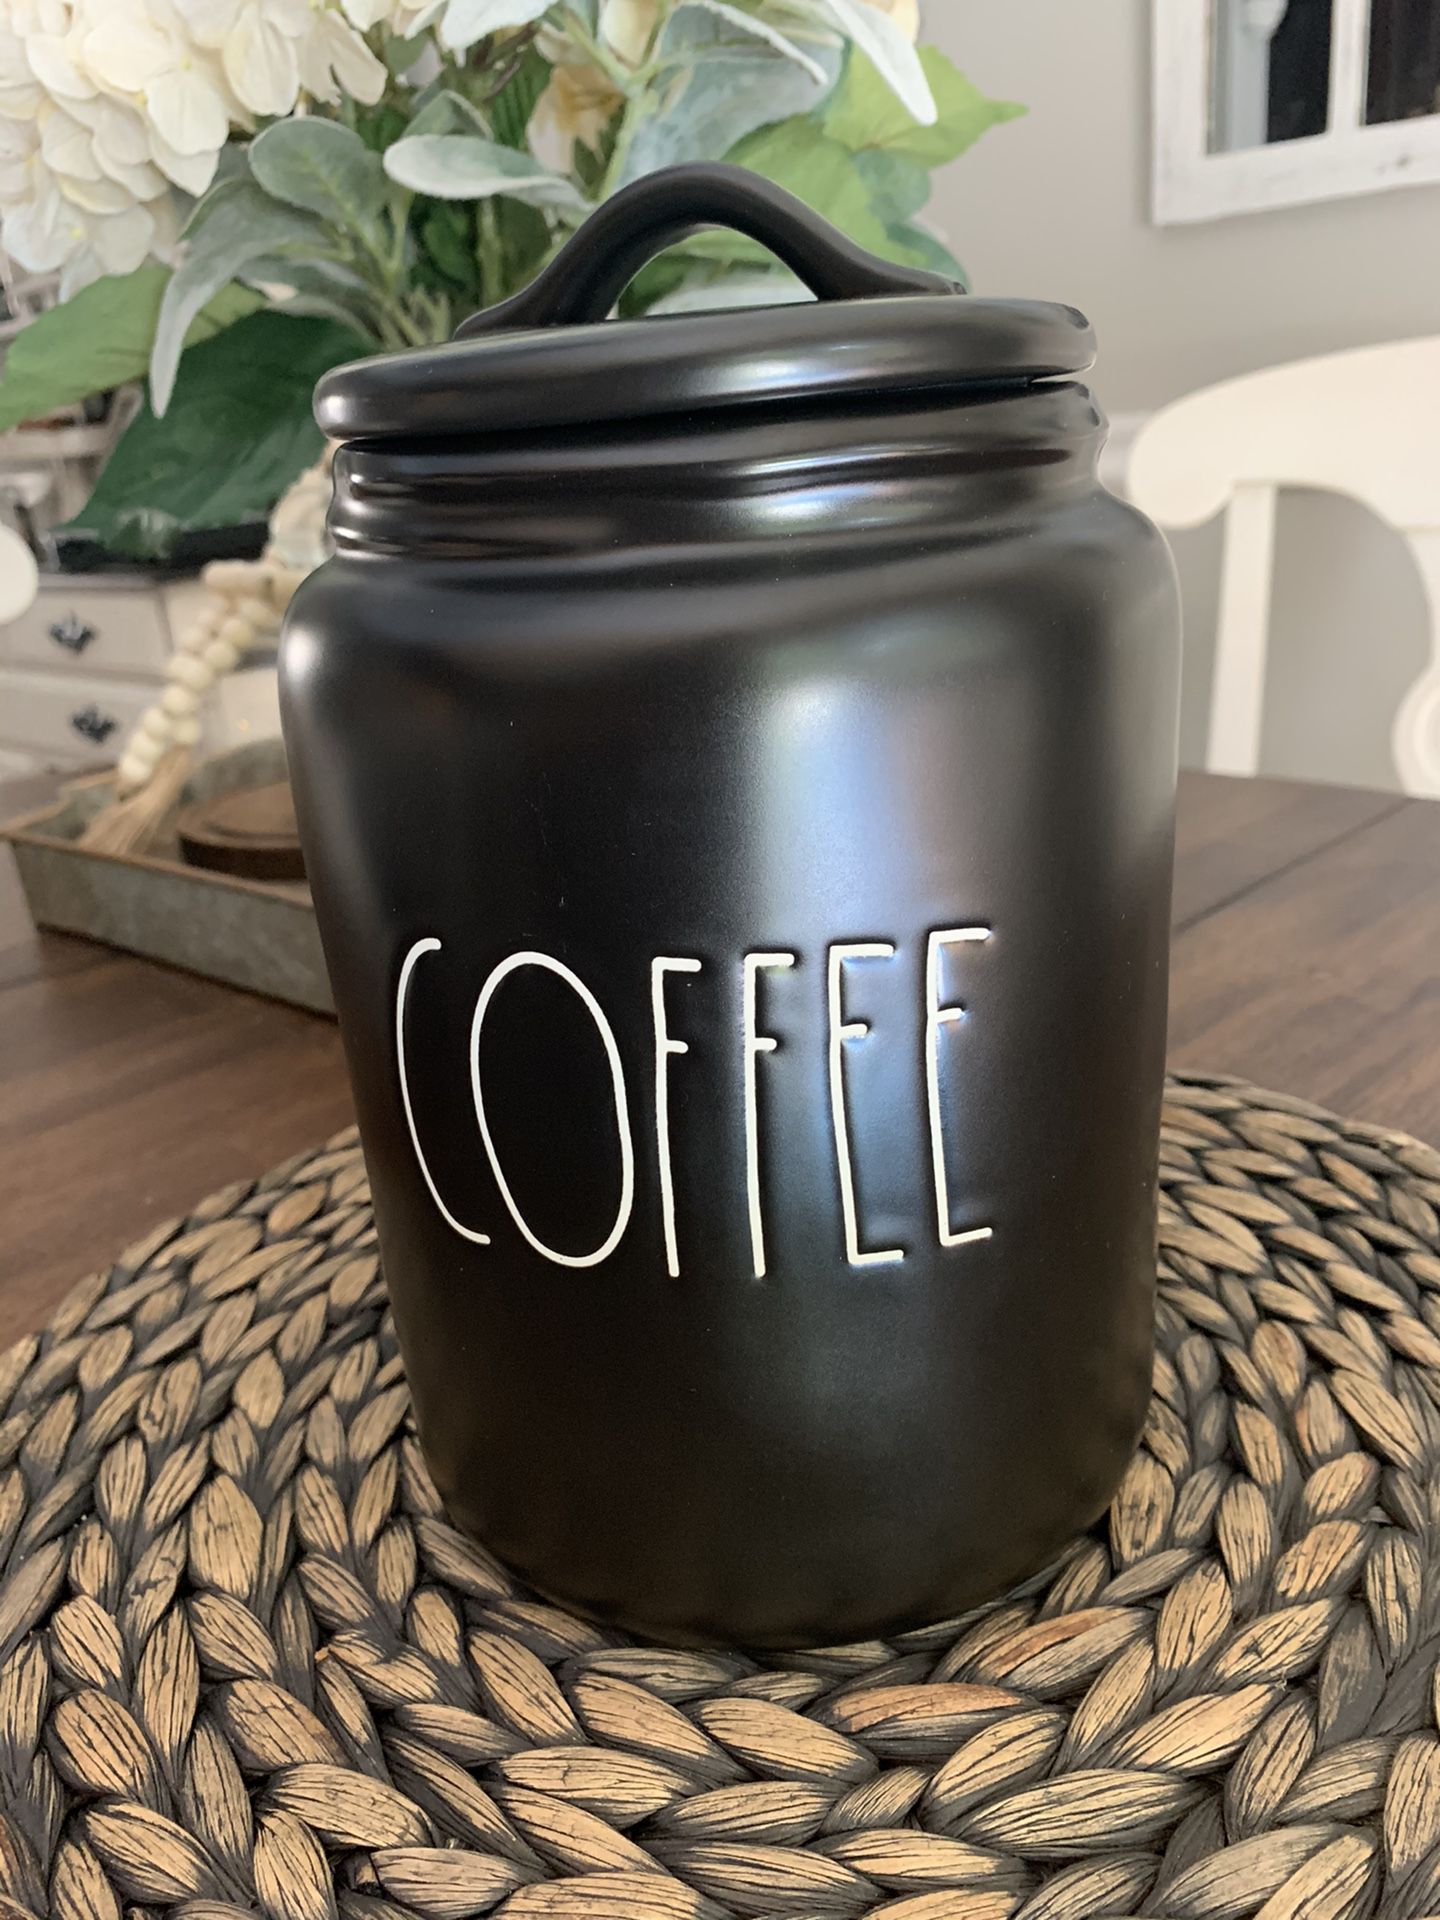 Rae Dunn COFFEE canister